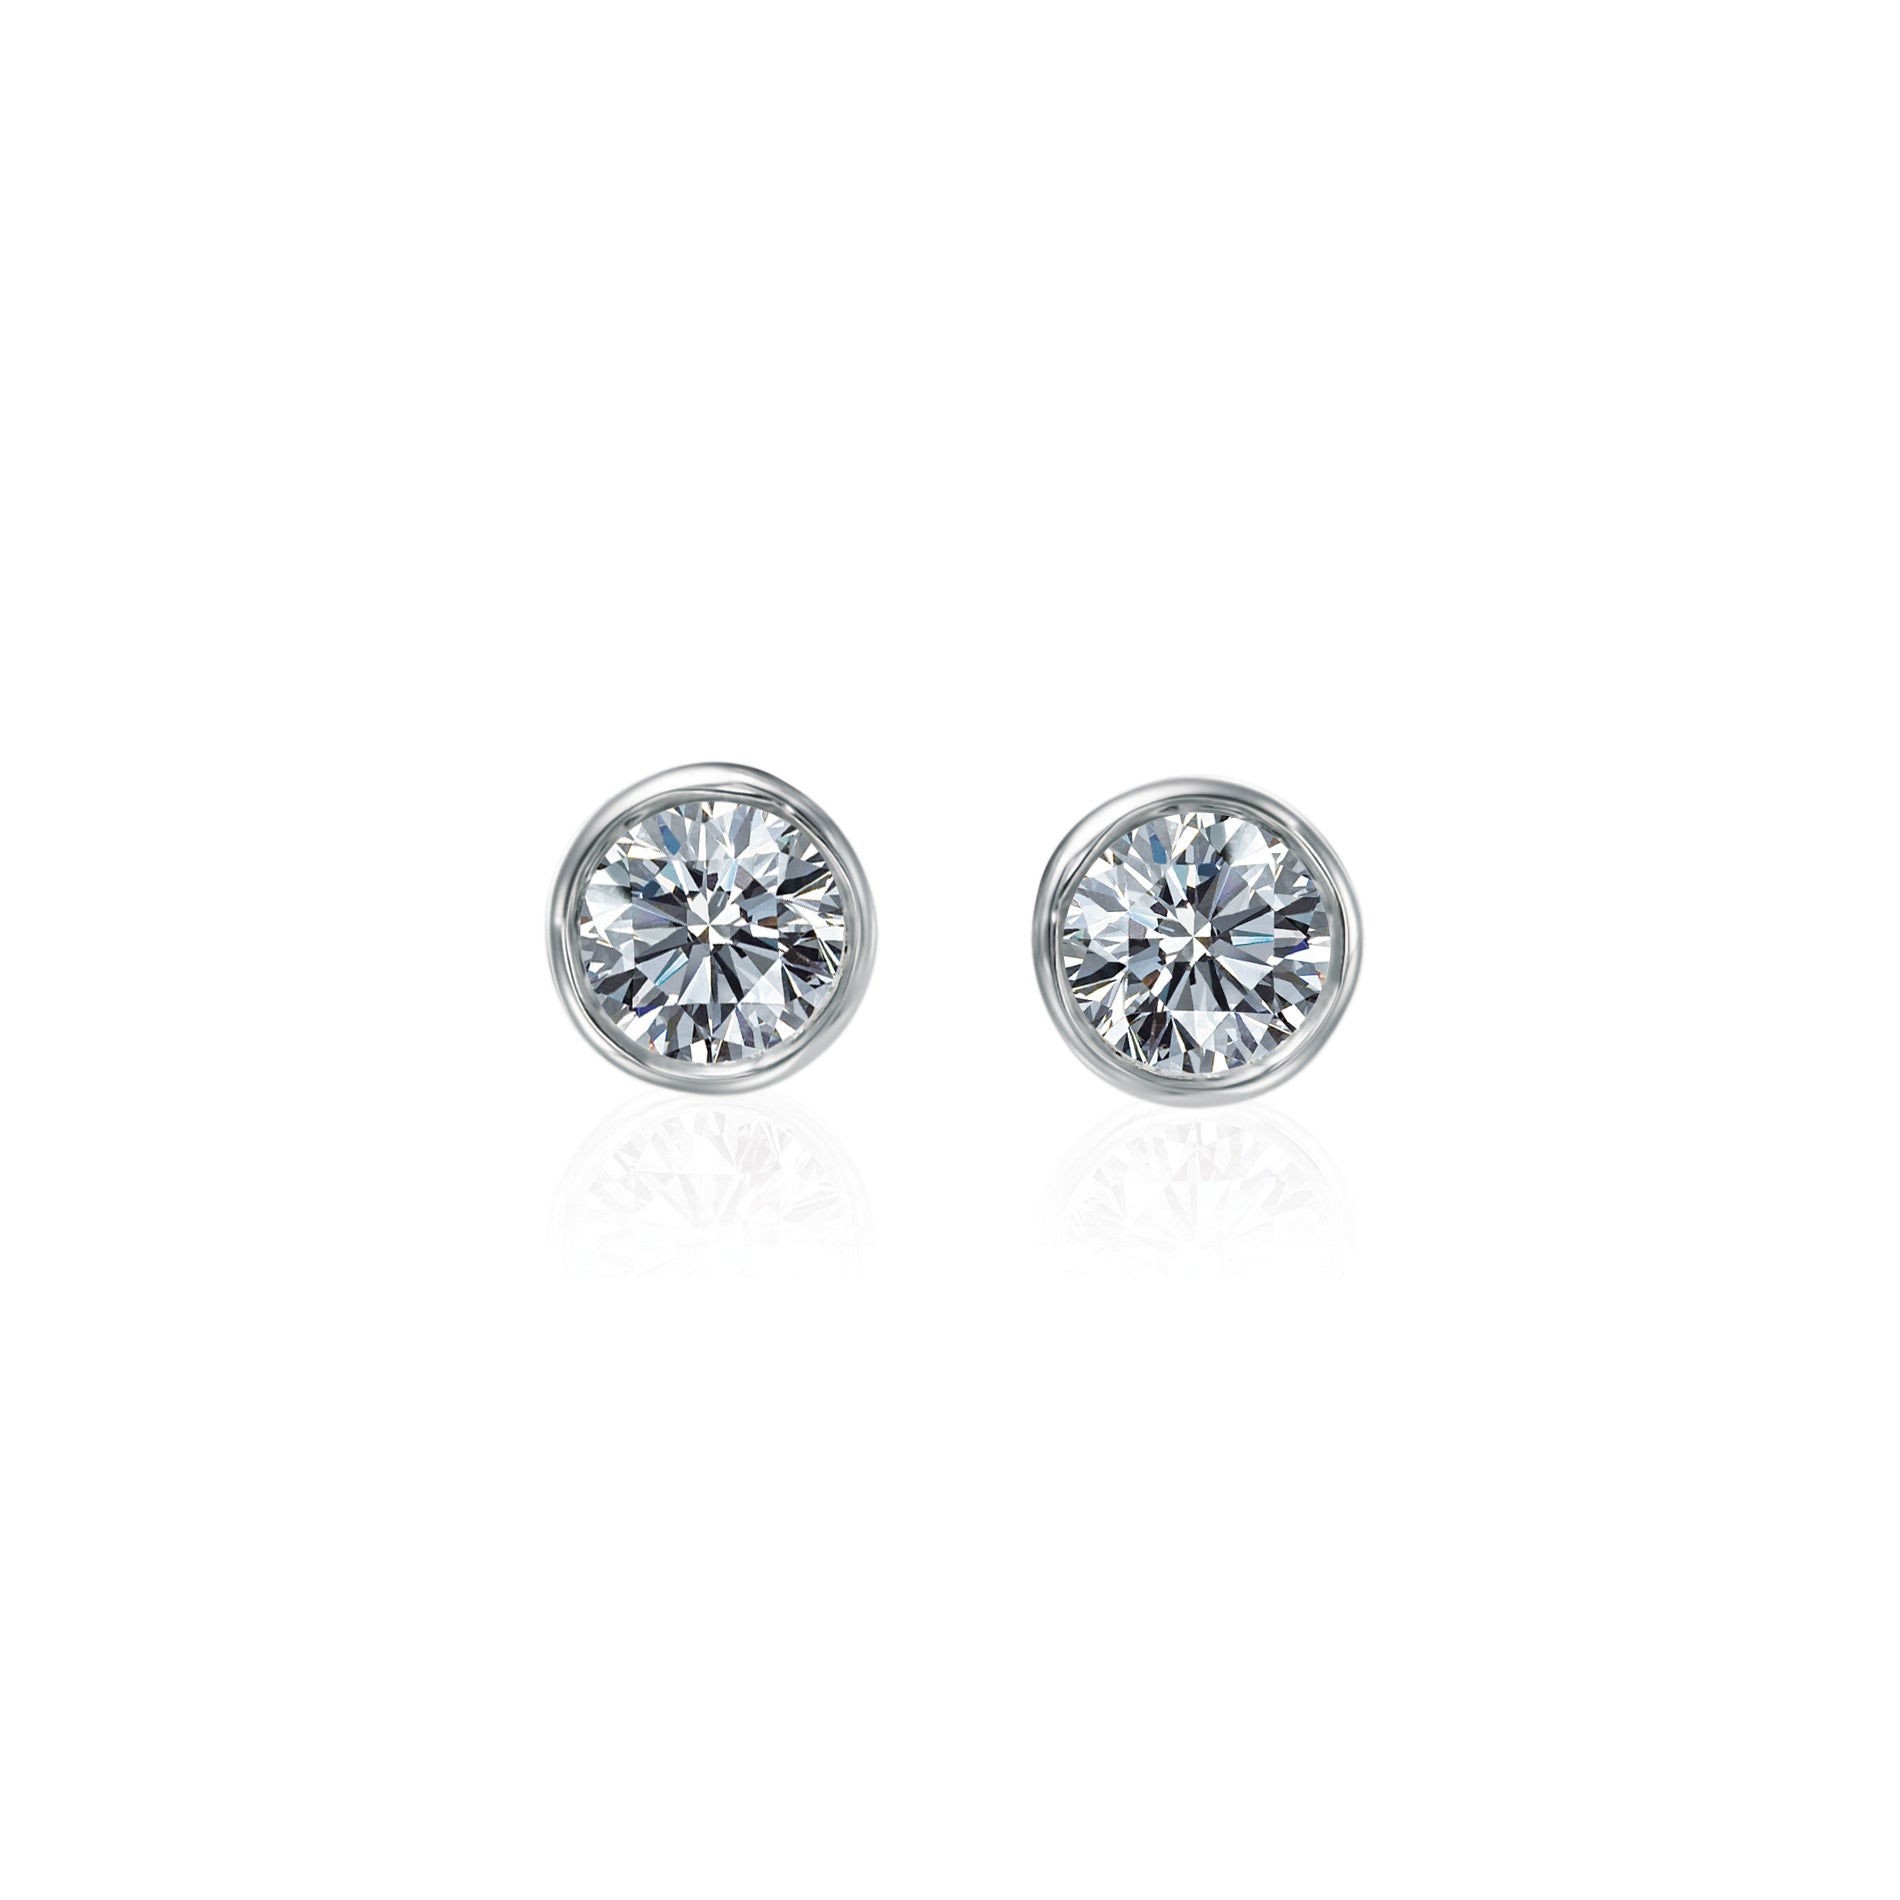 Bezel Set Diamond Earring Studs